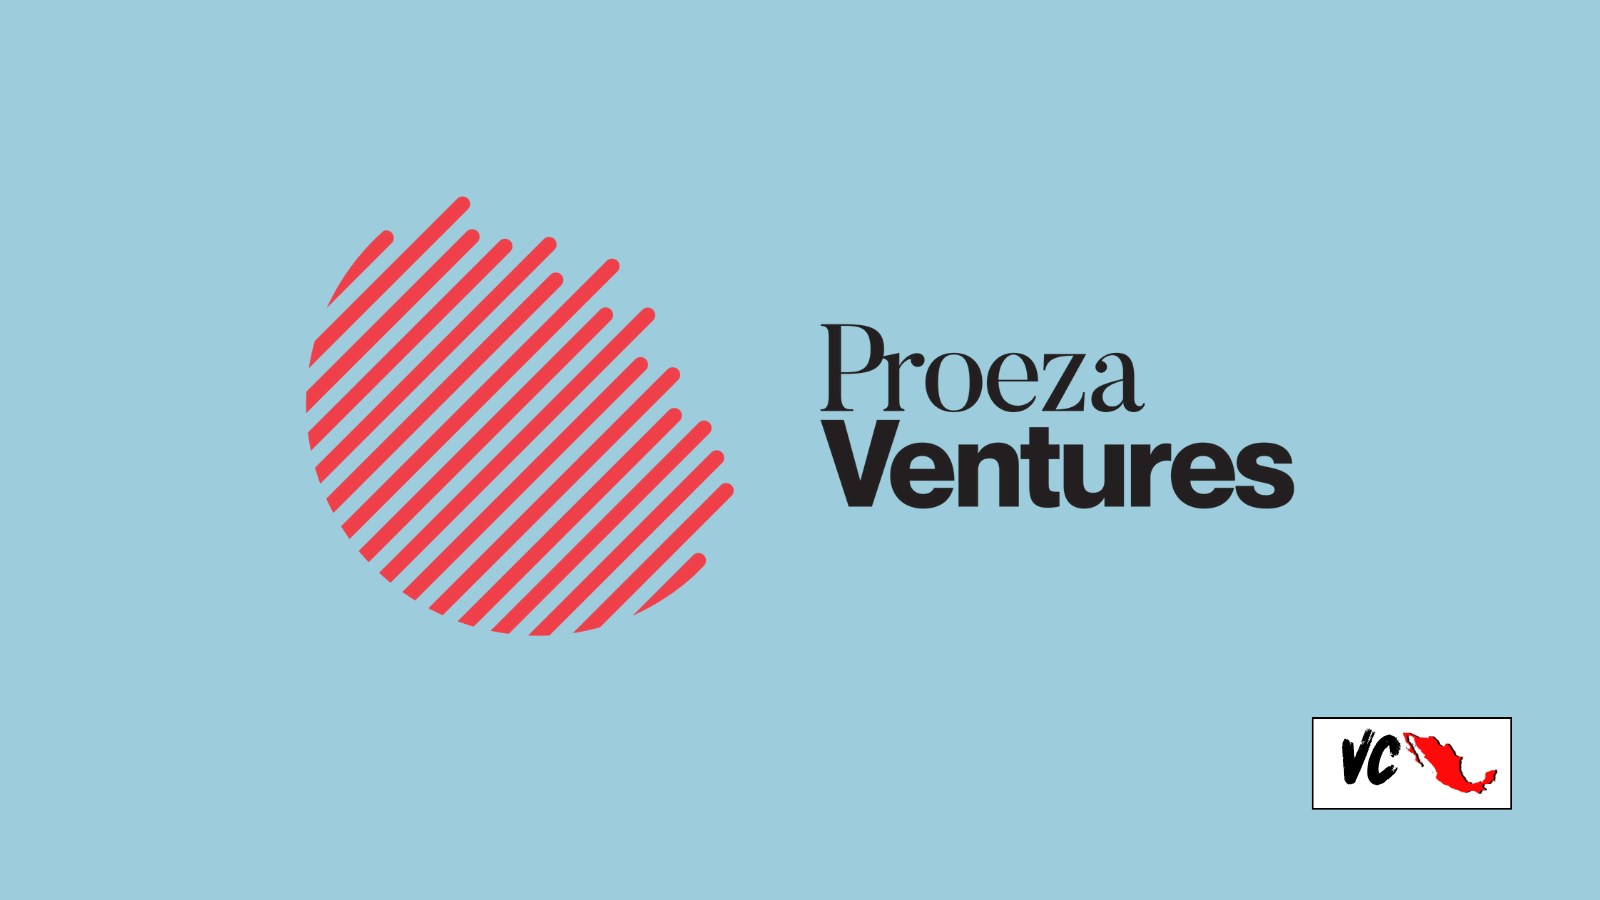 VC Mx: Proeza Ventures